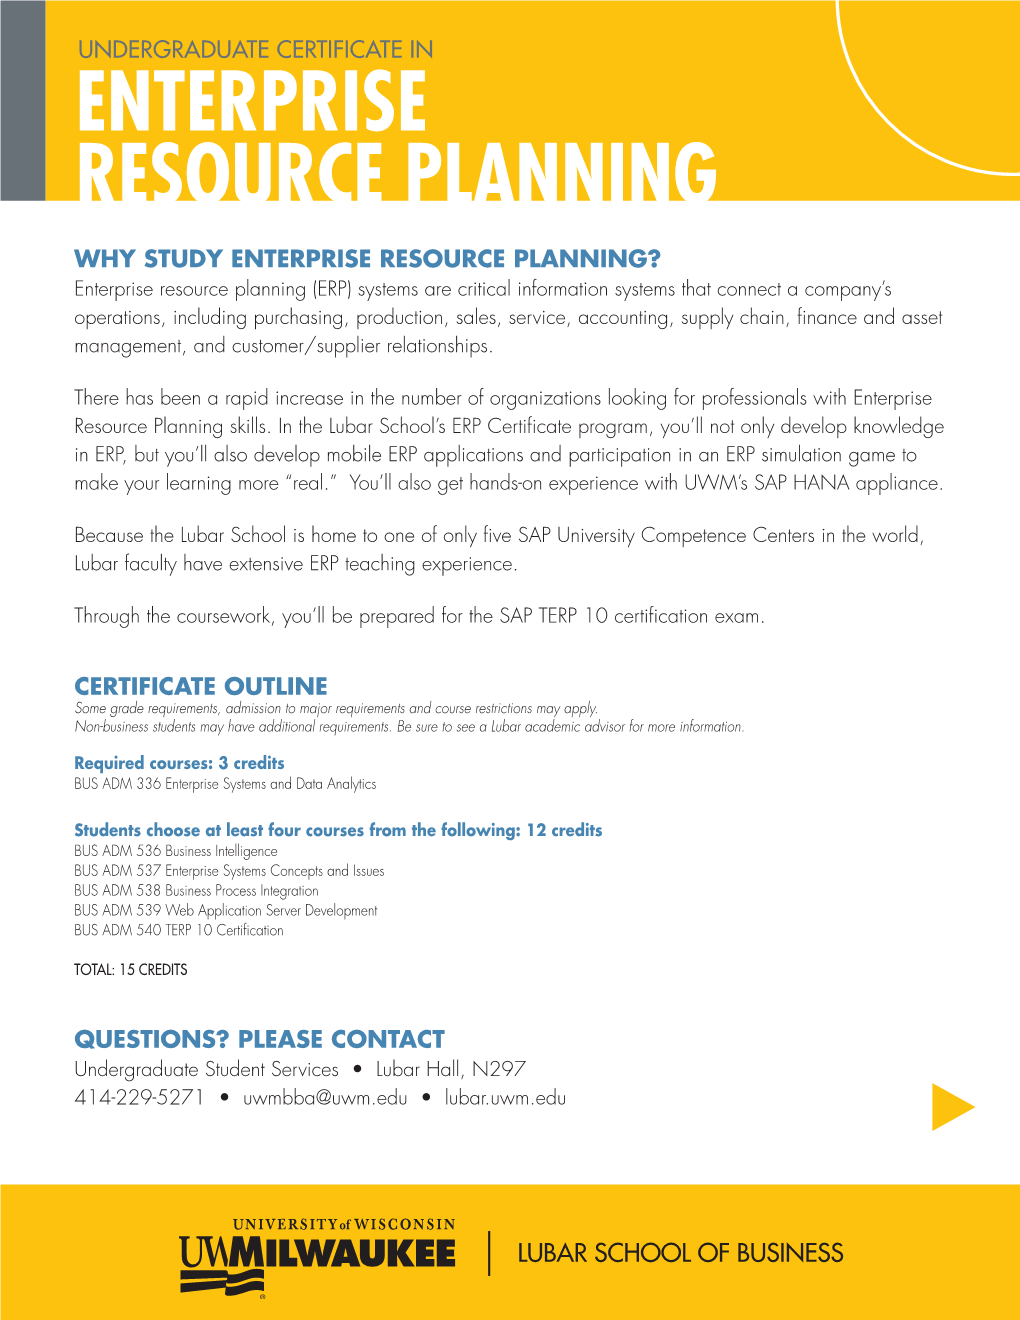 Enterprise Resource Planning (ERP) Certificate